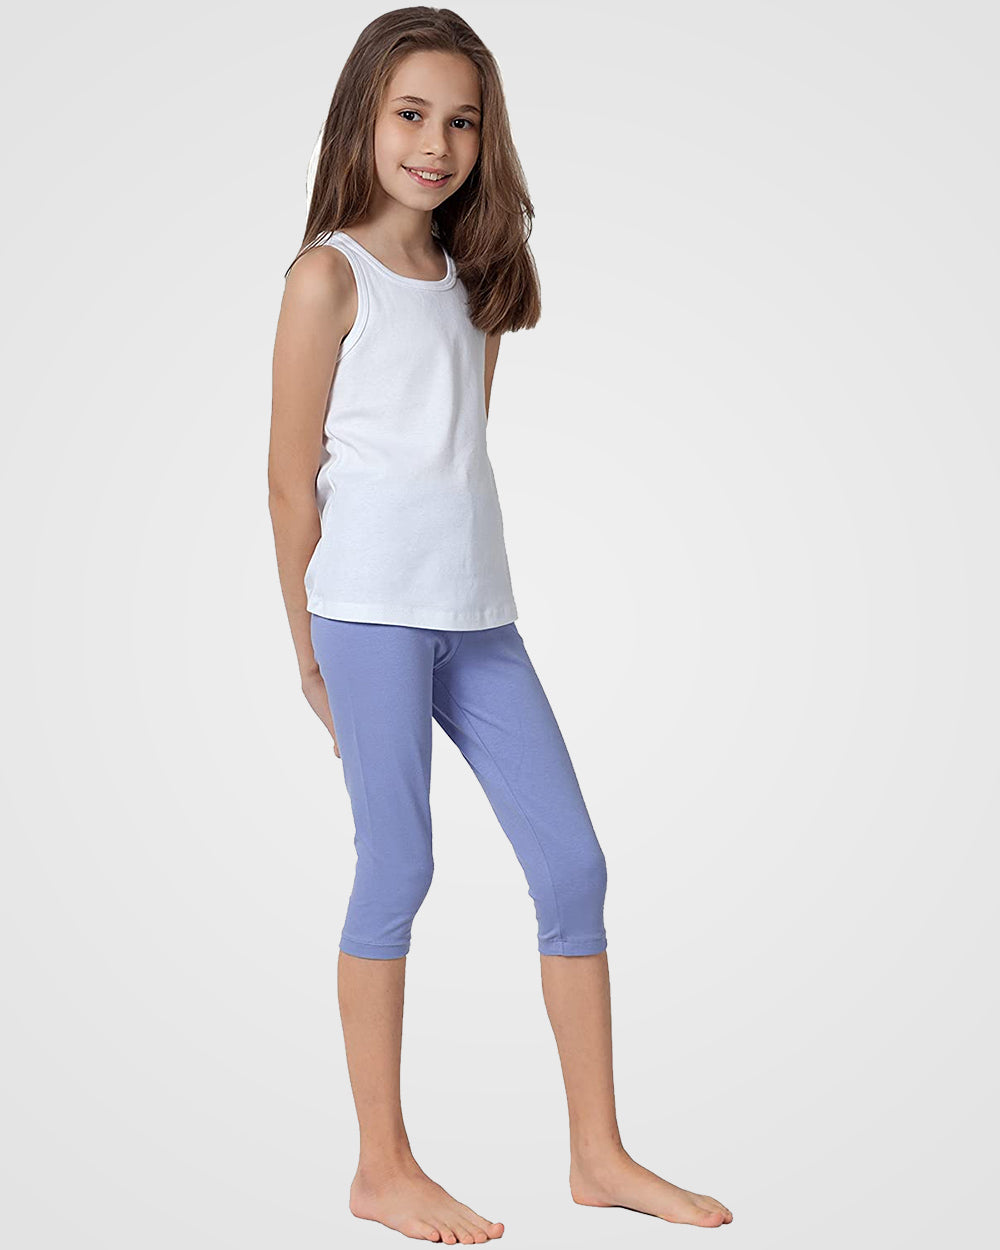 Organic Cotton+Spandex Cropped Leggings for Girls - Lavender